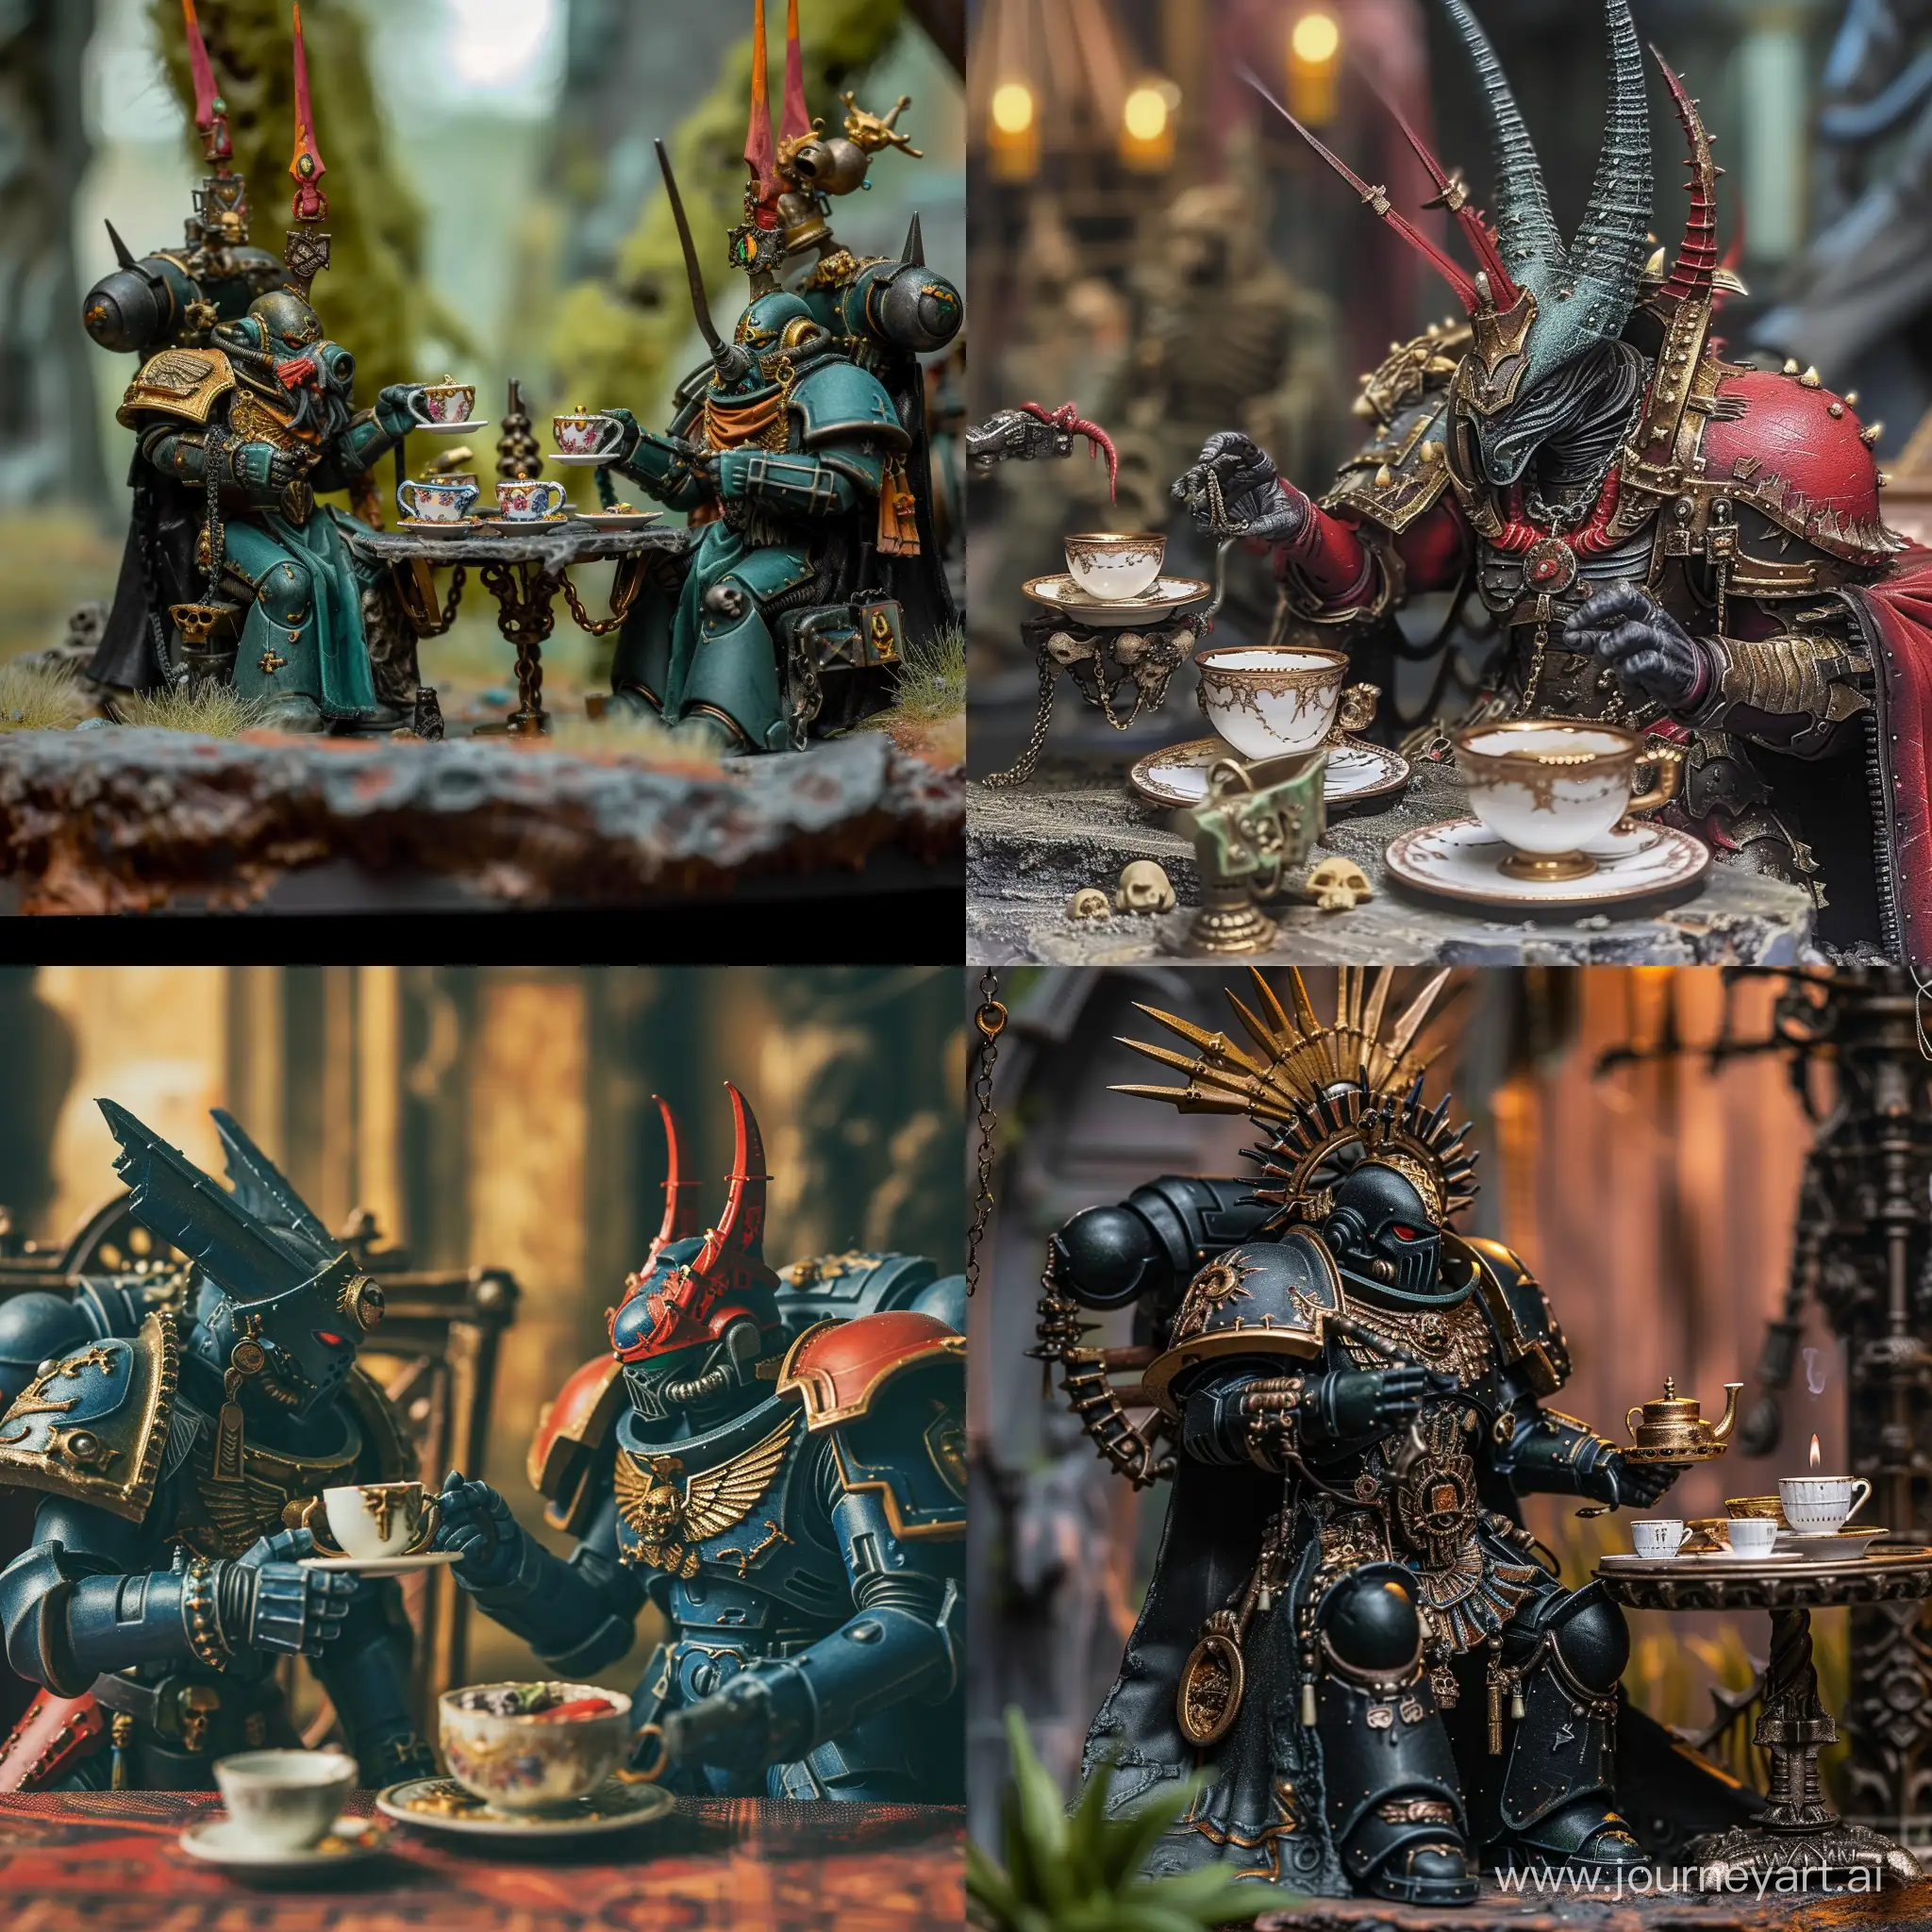 Drukhari from Warhammer 40000 having a tea party